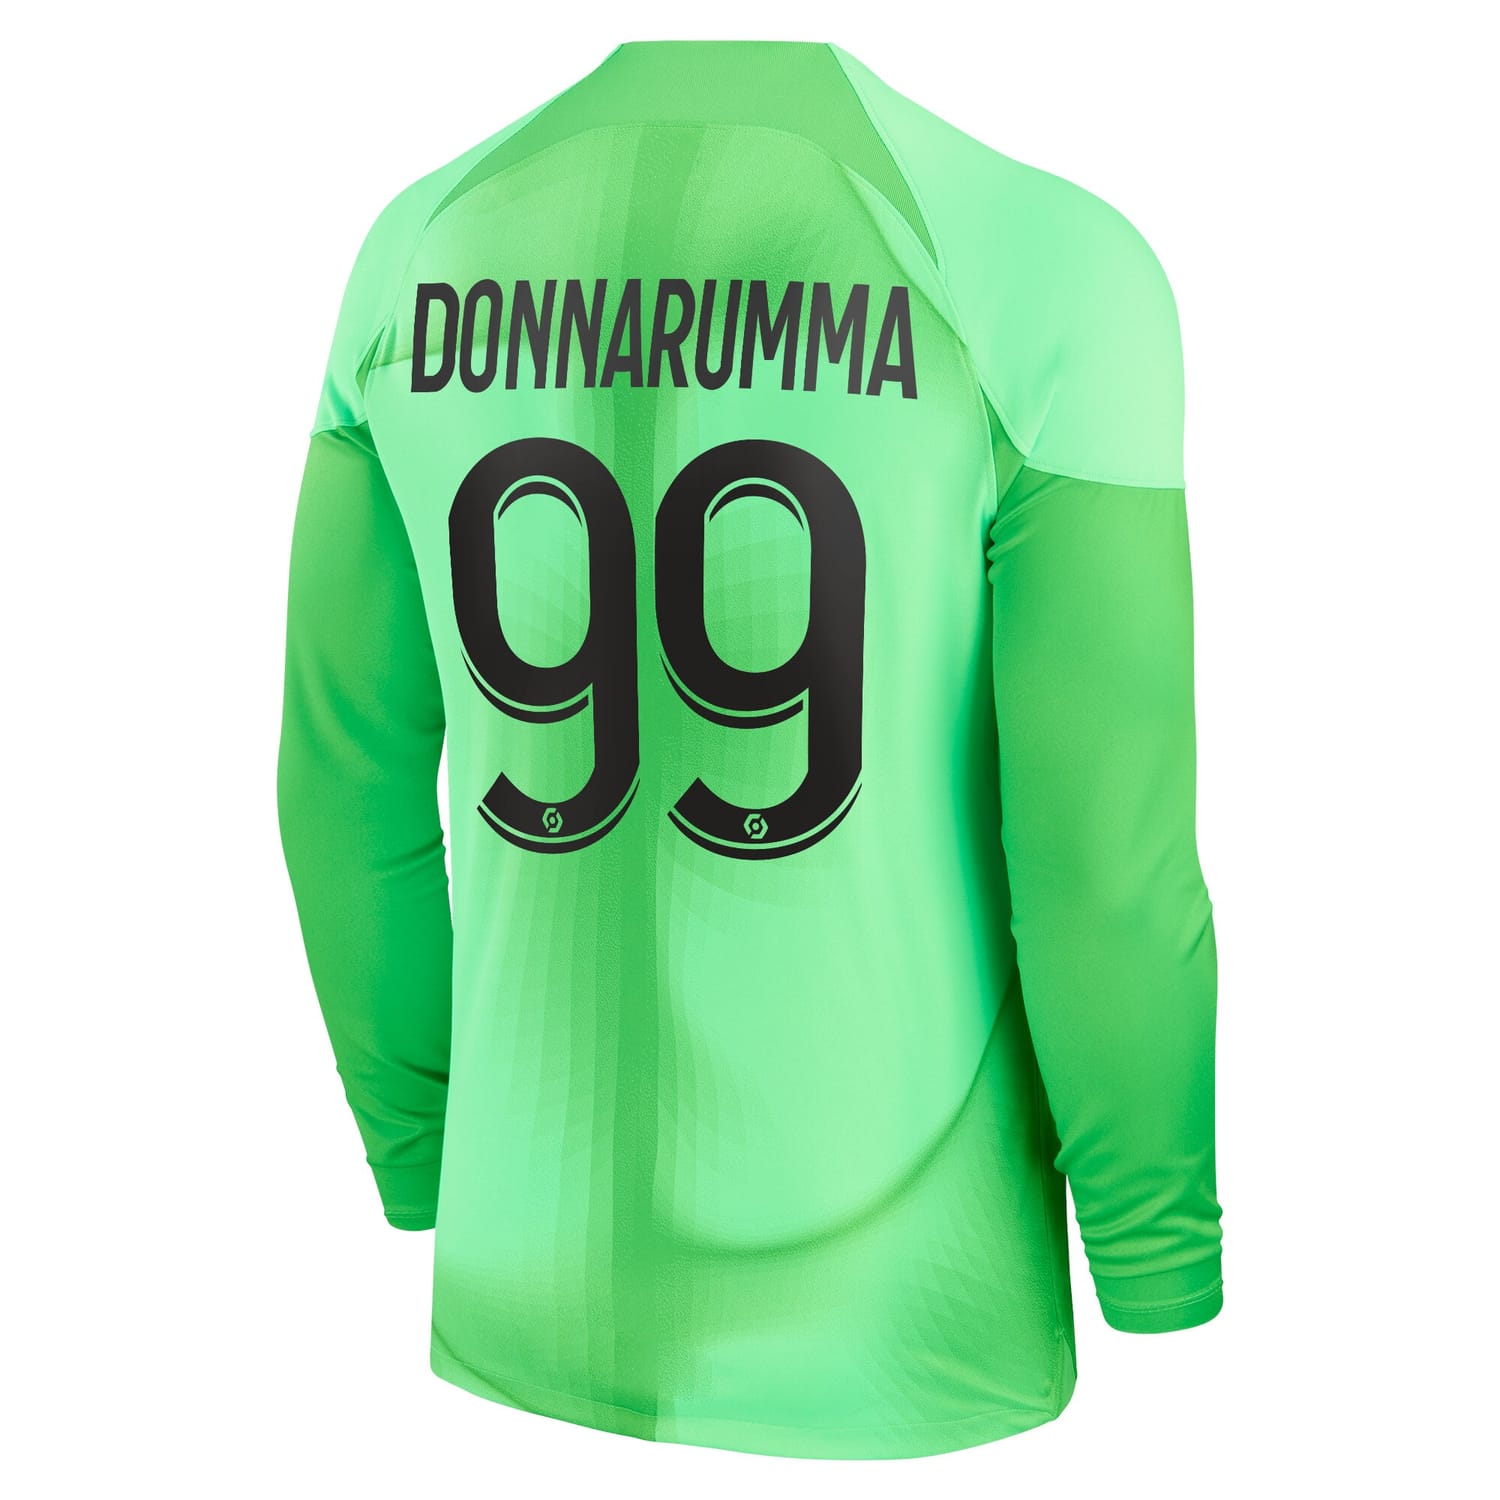 Ligue 1 Paris Saint-Germain Home Goalkeeper Jersey Shirt 2022-23 player Gianluigi Donnarumma 99 printing for Men